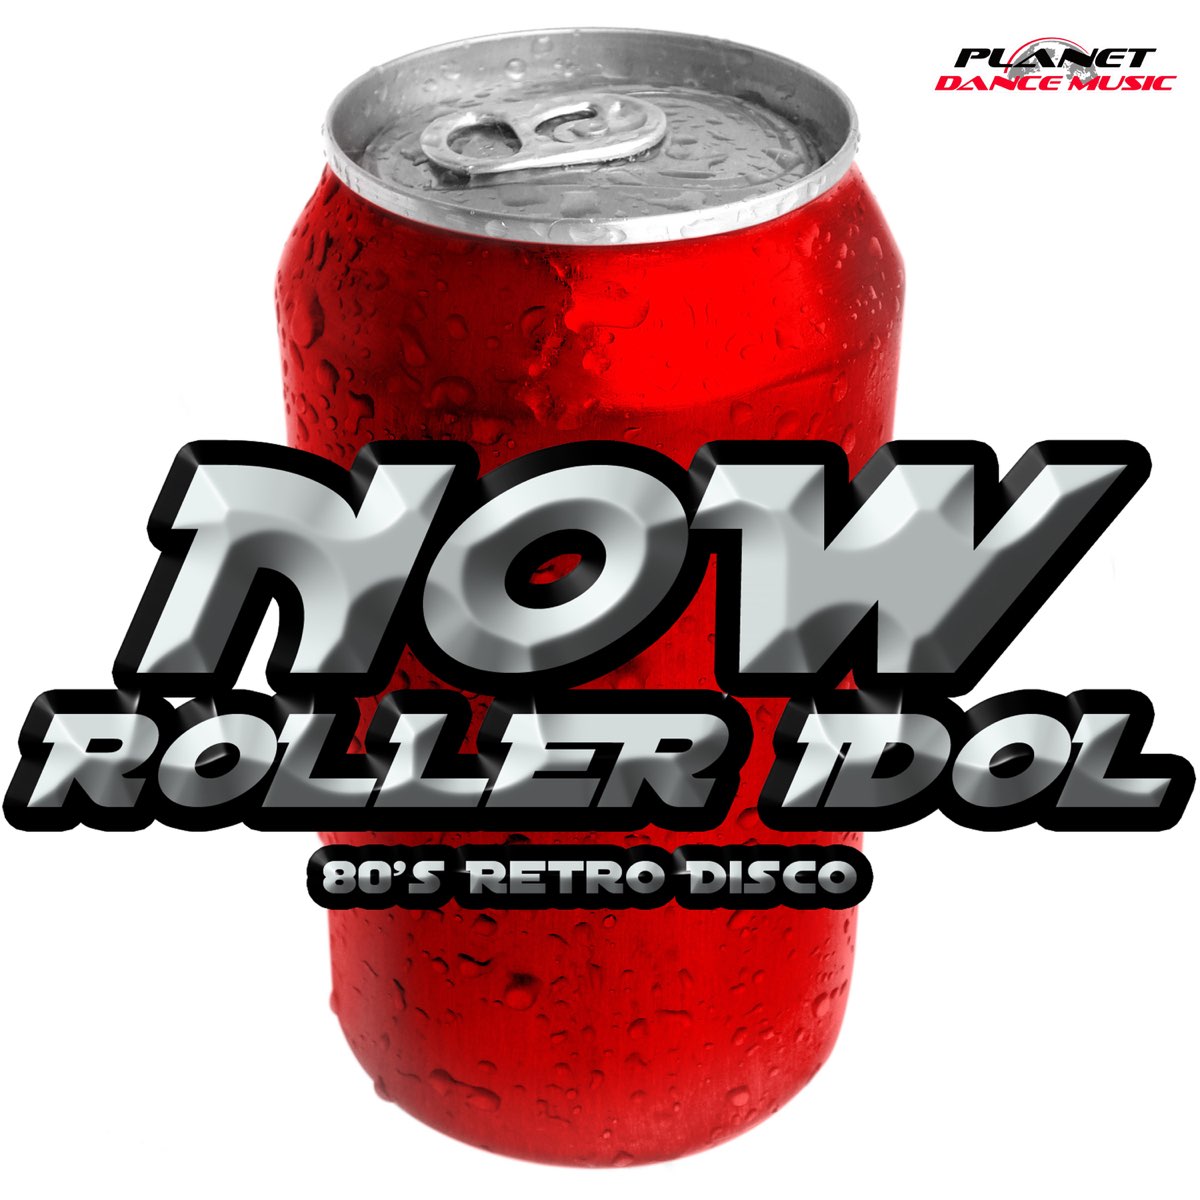 Rolling now. Bonfeel Electro Band группа. Roller Idol feat. Bonfeel Electro Band. Roller Idol группа. Roller Idol only you.